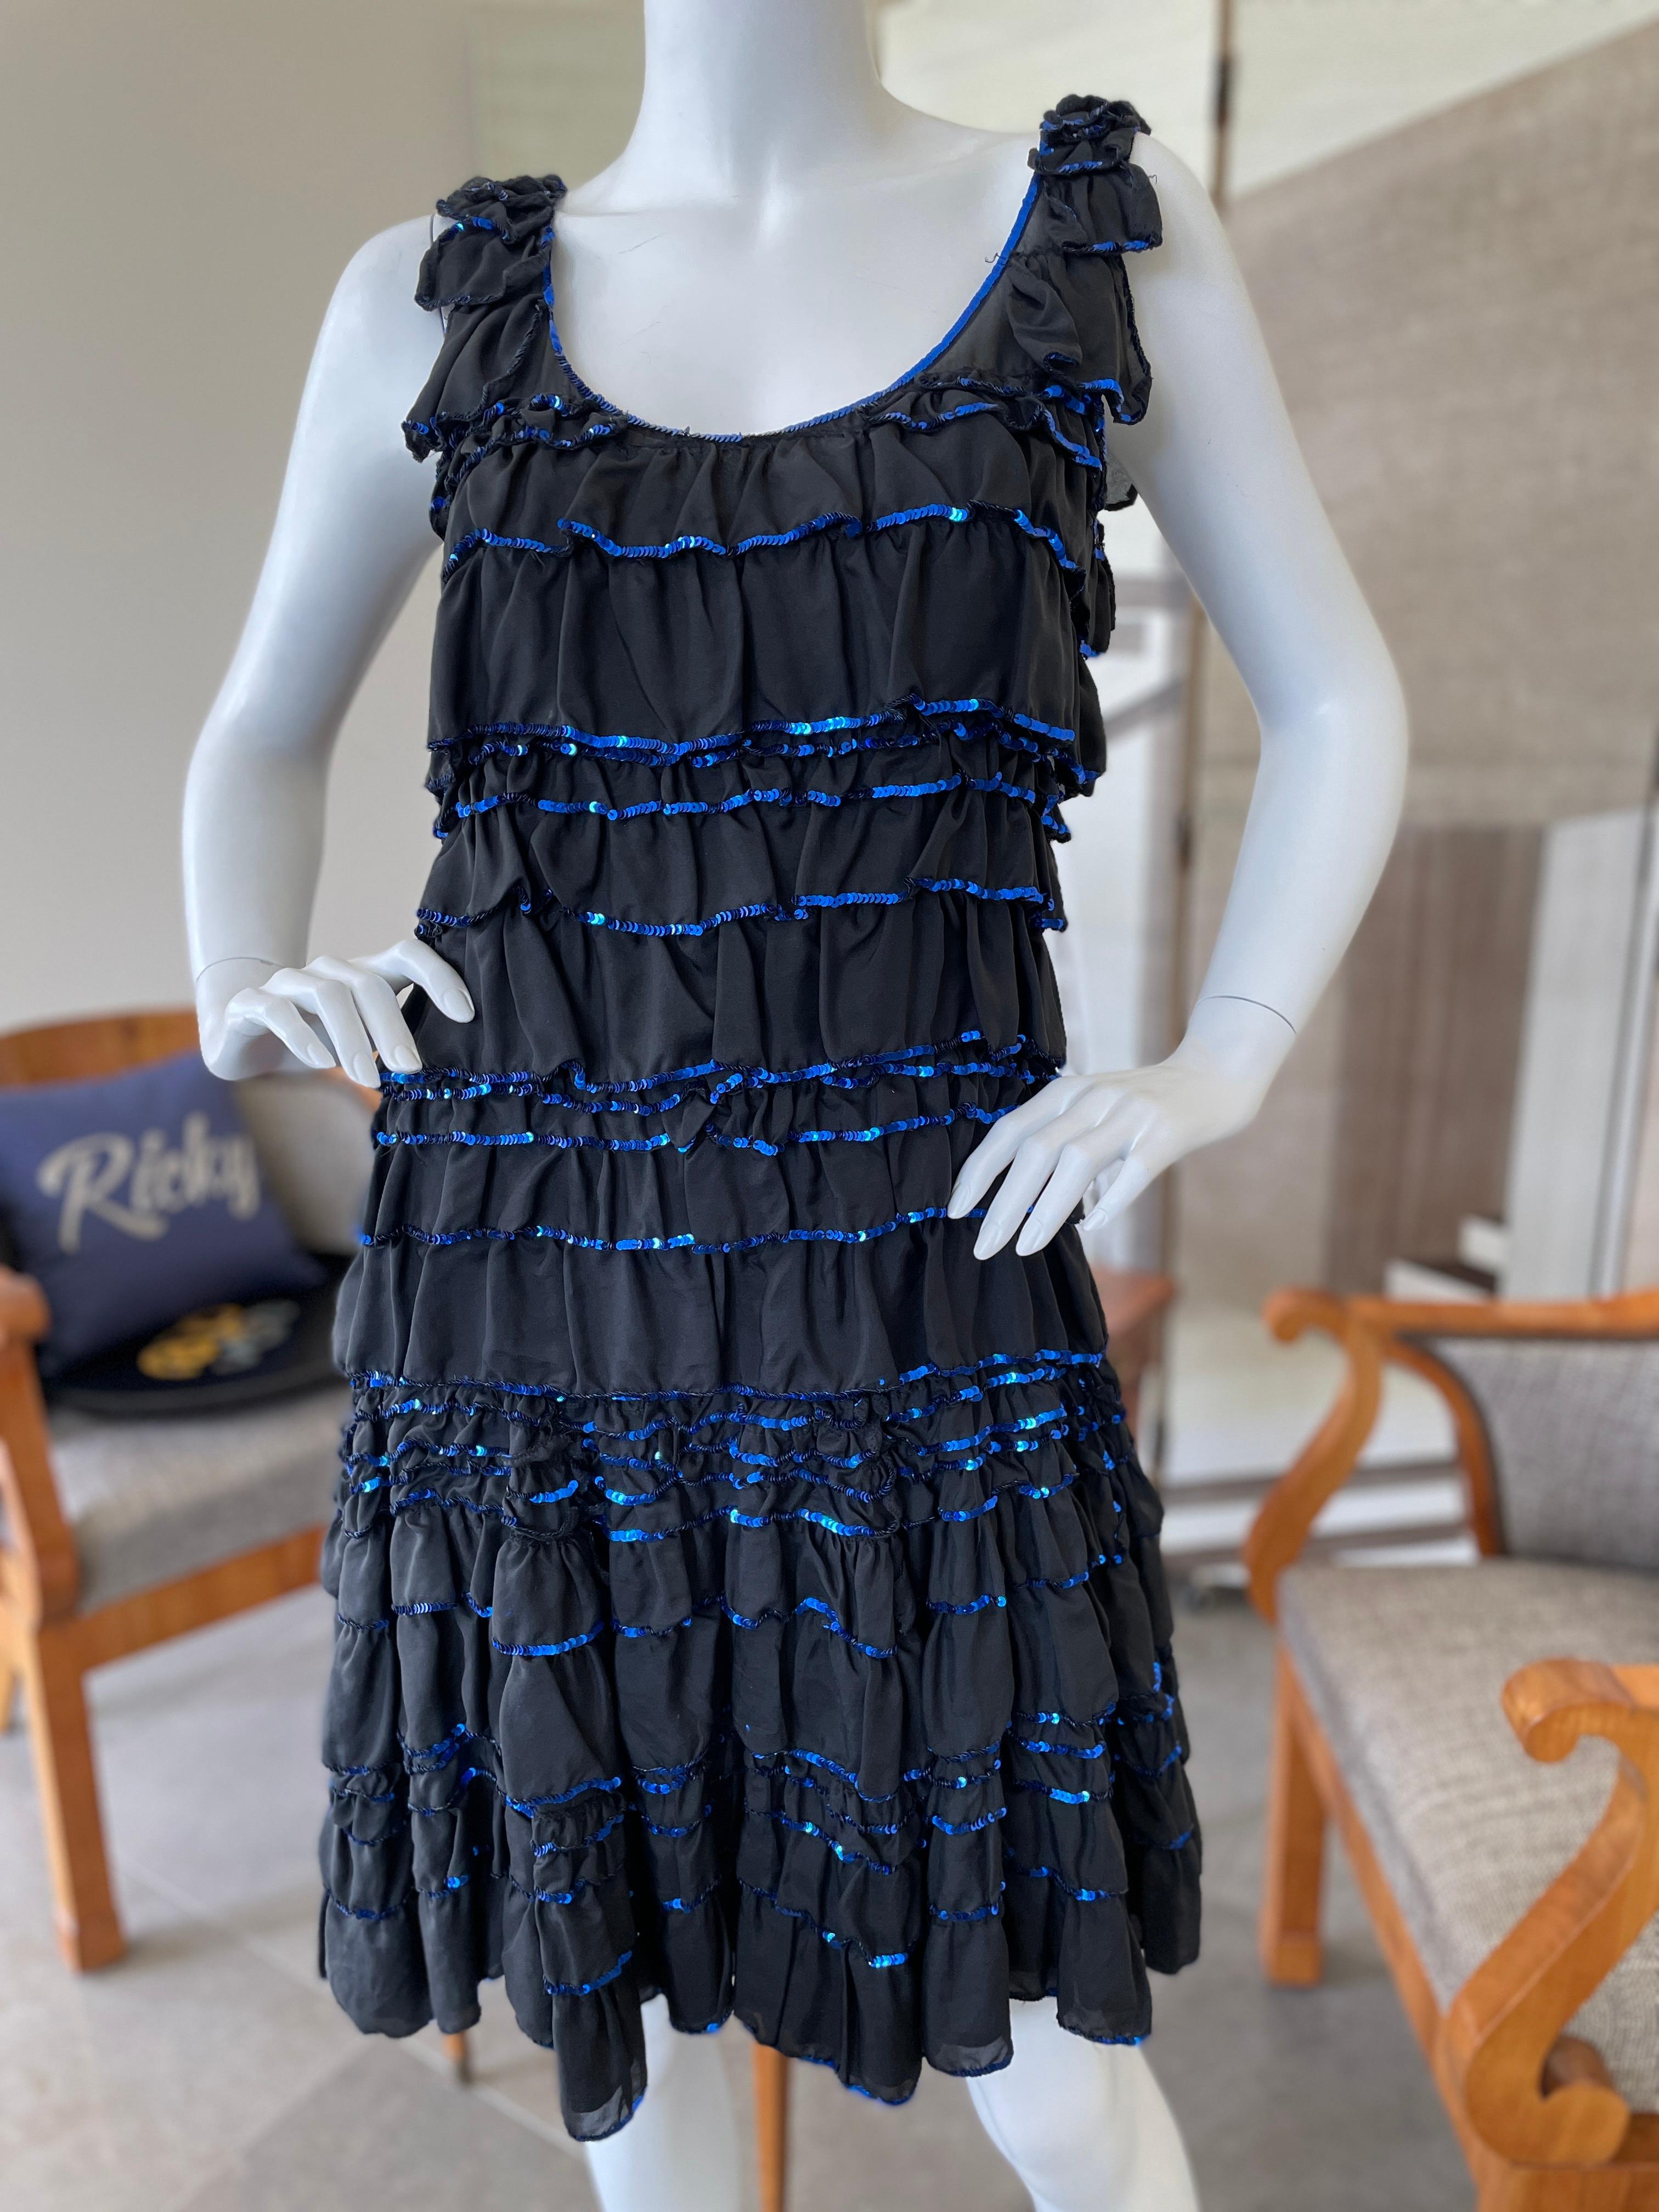 Lanvin by Alber Elbaz Ete 2004 Black Ruffle Cocktail Dress with Blue Sequin Trim For Sale 5